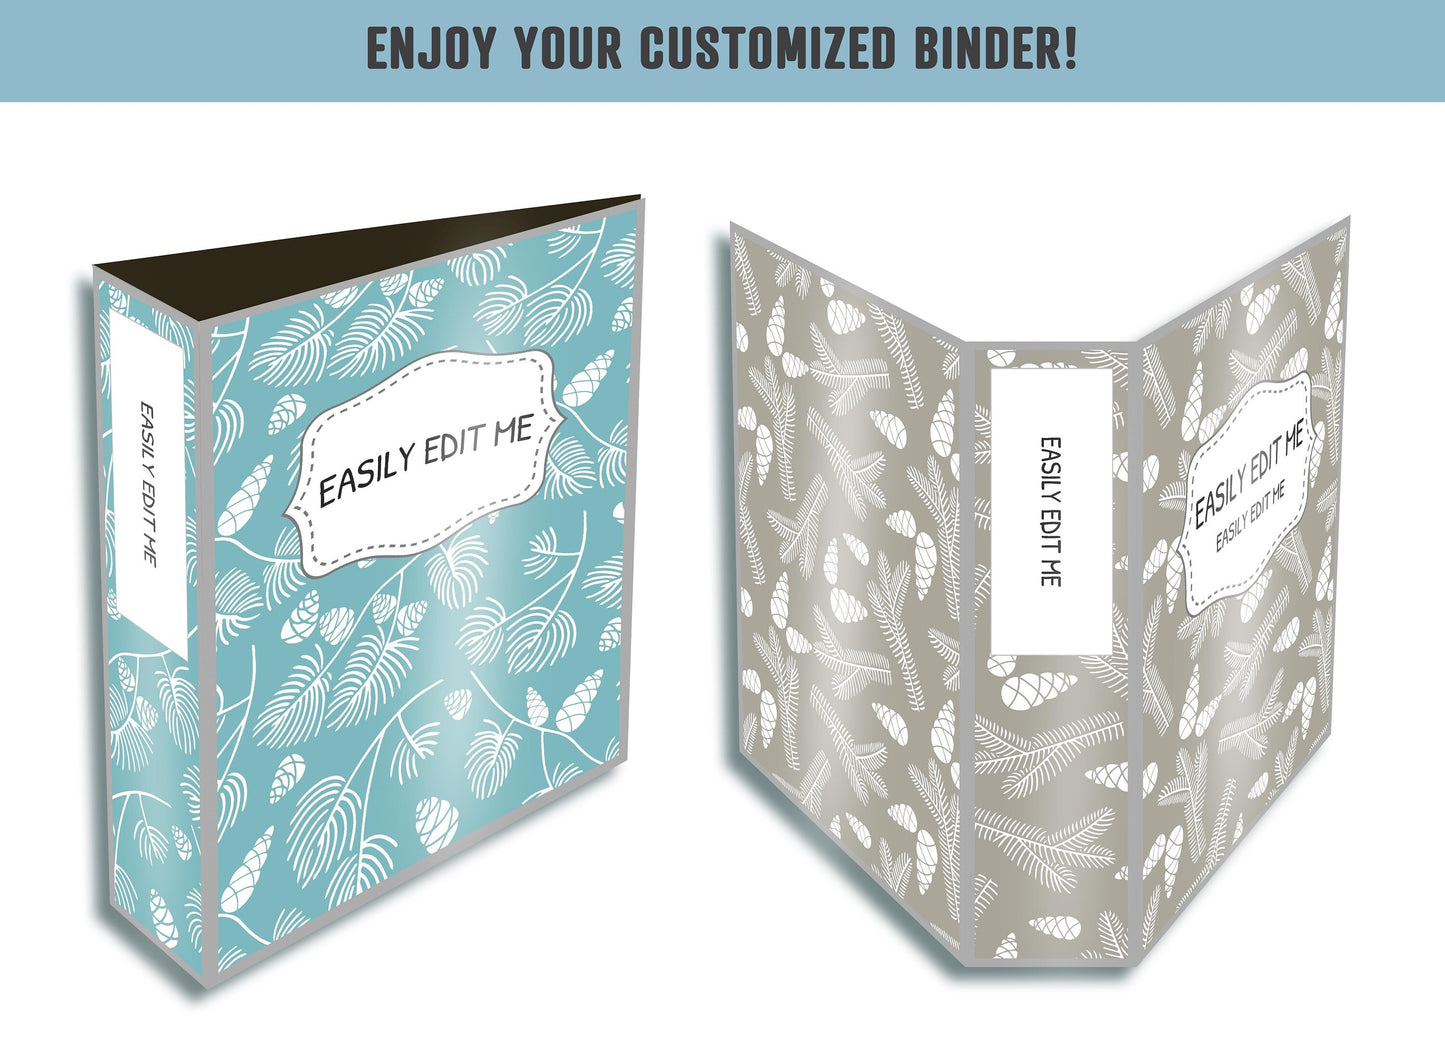 Binder Cover Printable Editable, 10 Covers+Spines, Binder Insert, Planner Cover, Teacher Binder, School Binder Cover, Fir/Pine Binder Covers